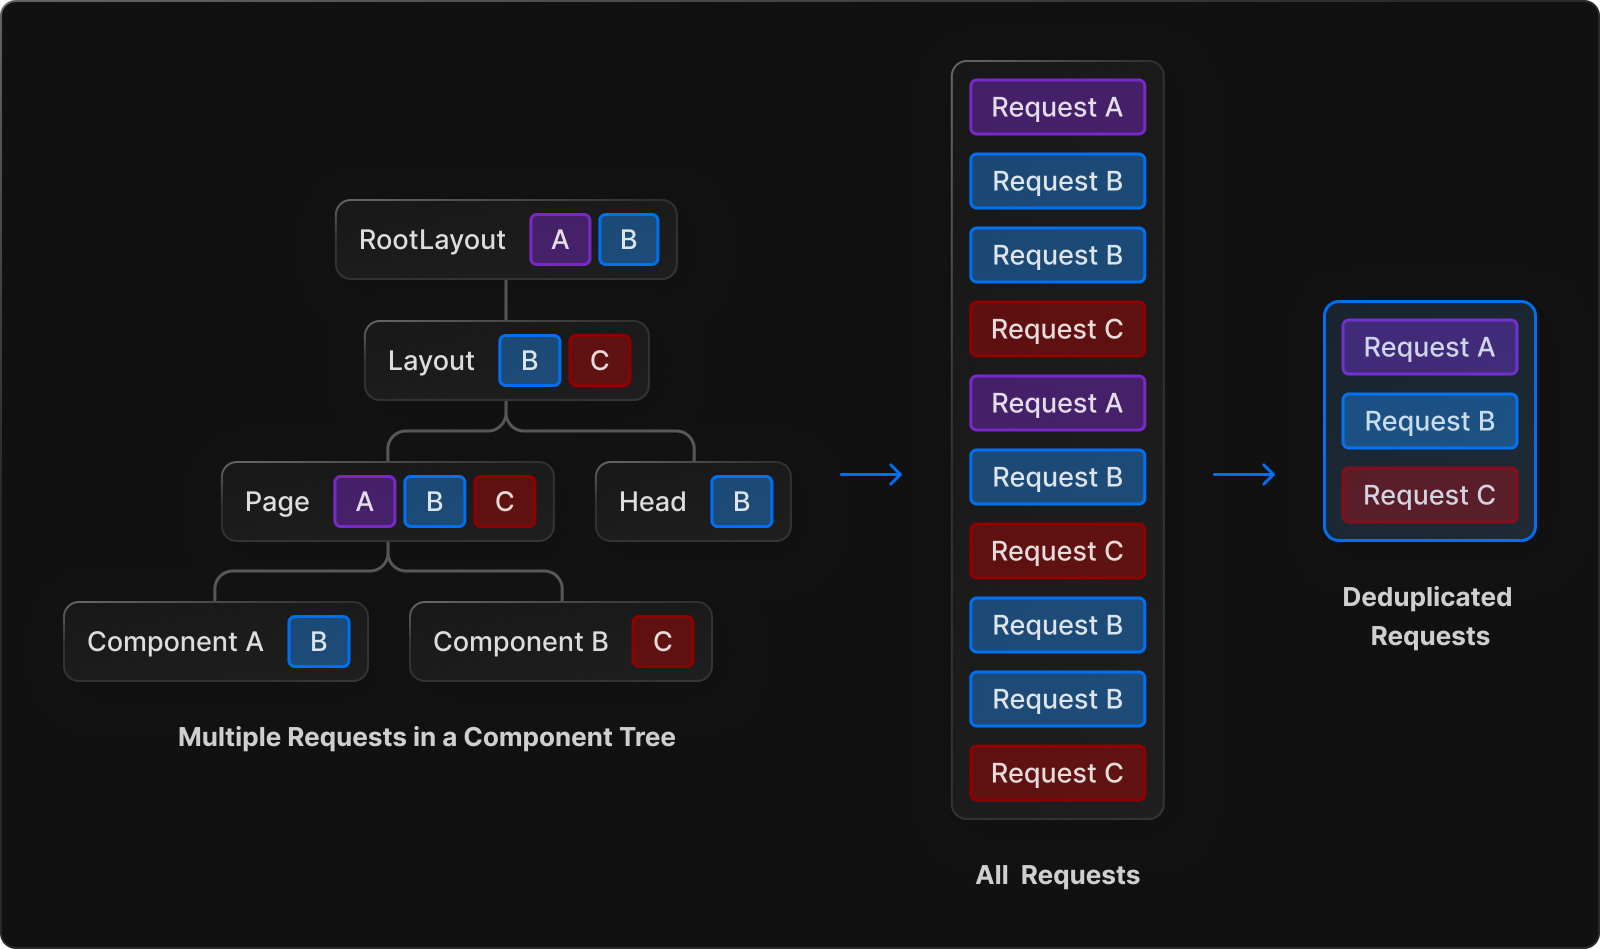 Deduplication in a component tree